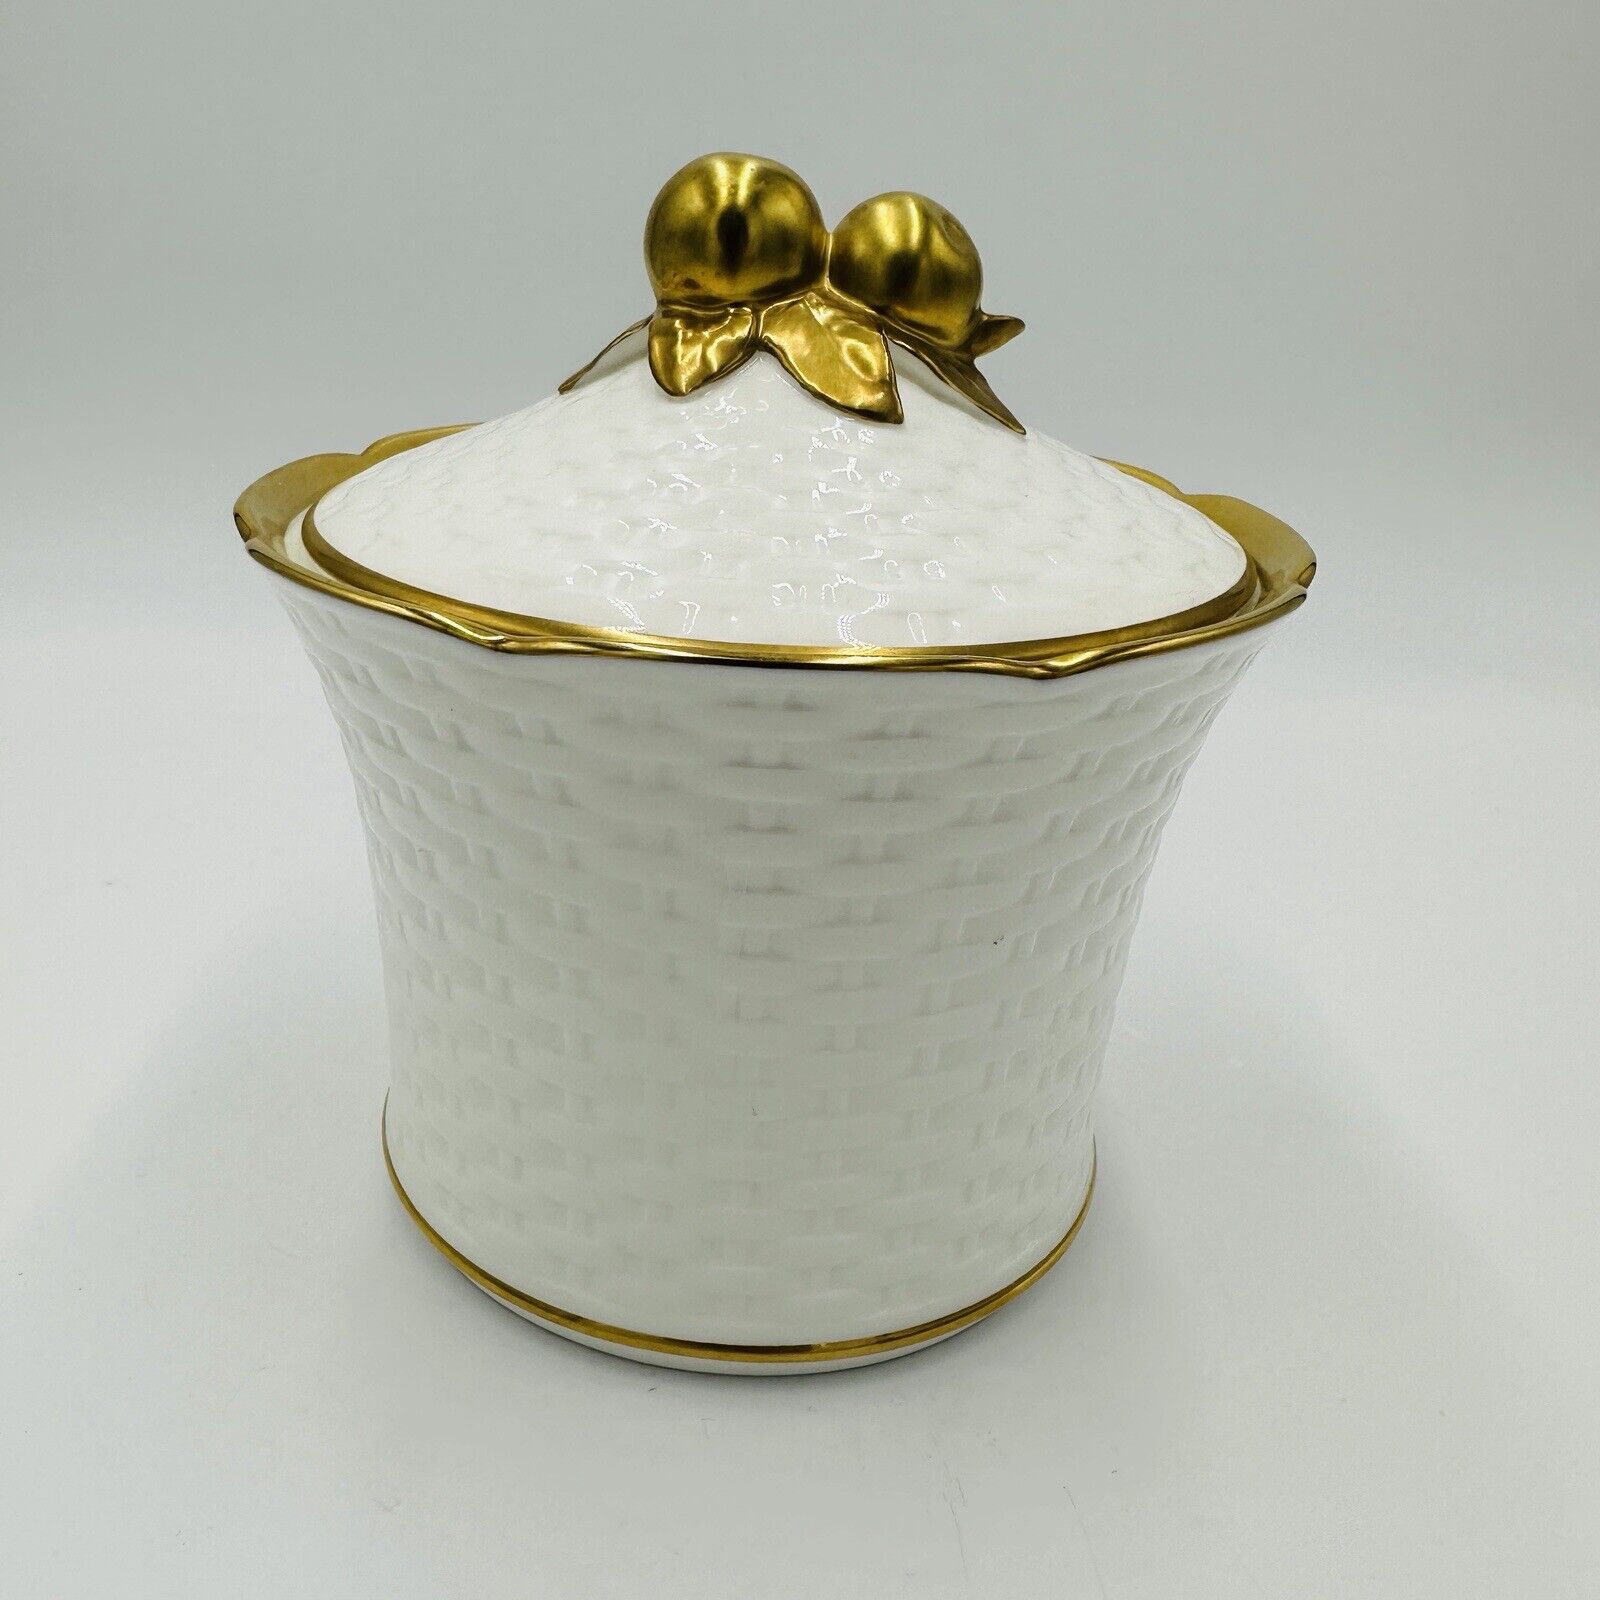 Noritake Studio Collection Canister Porcelain Basket White Gold Trim Japan Candy